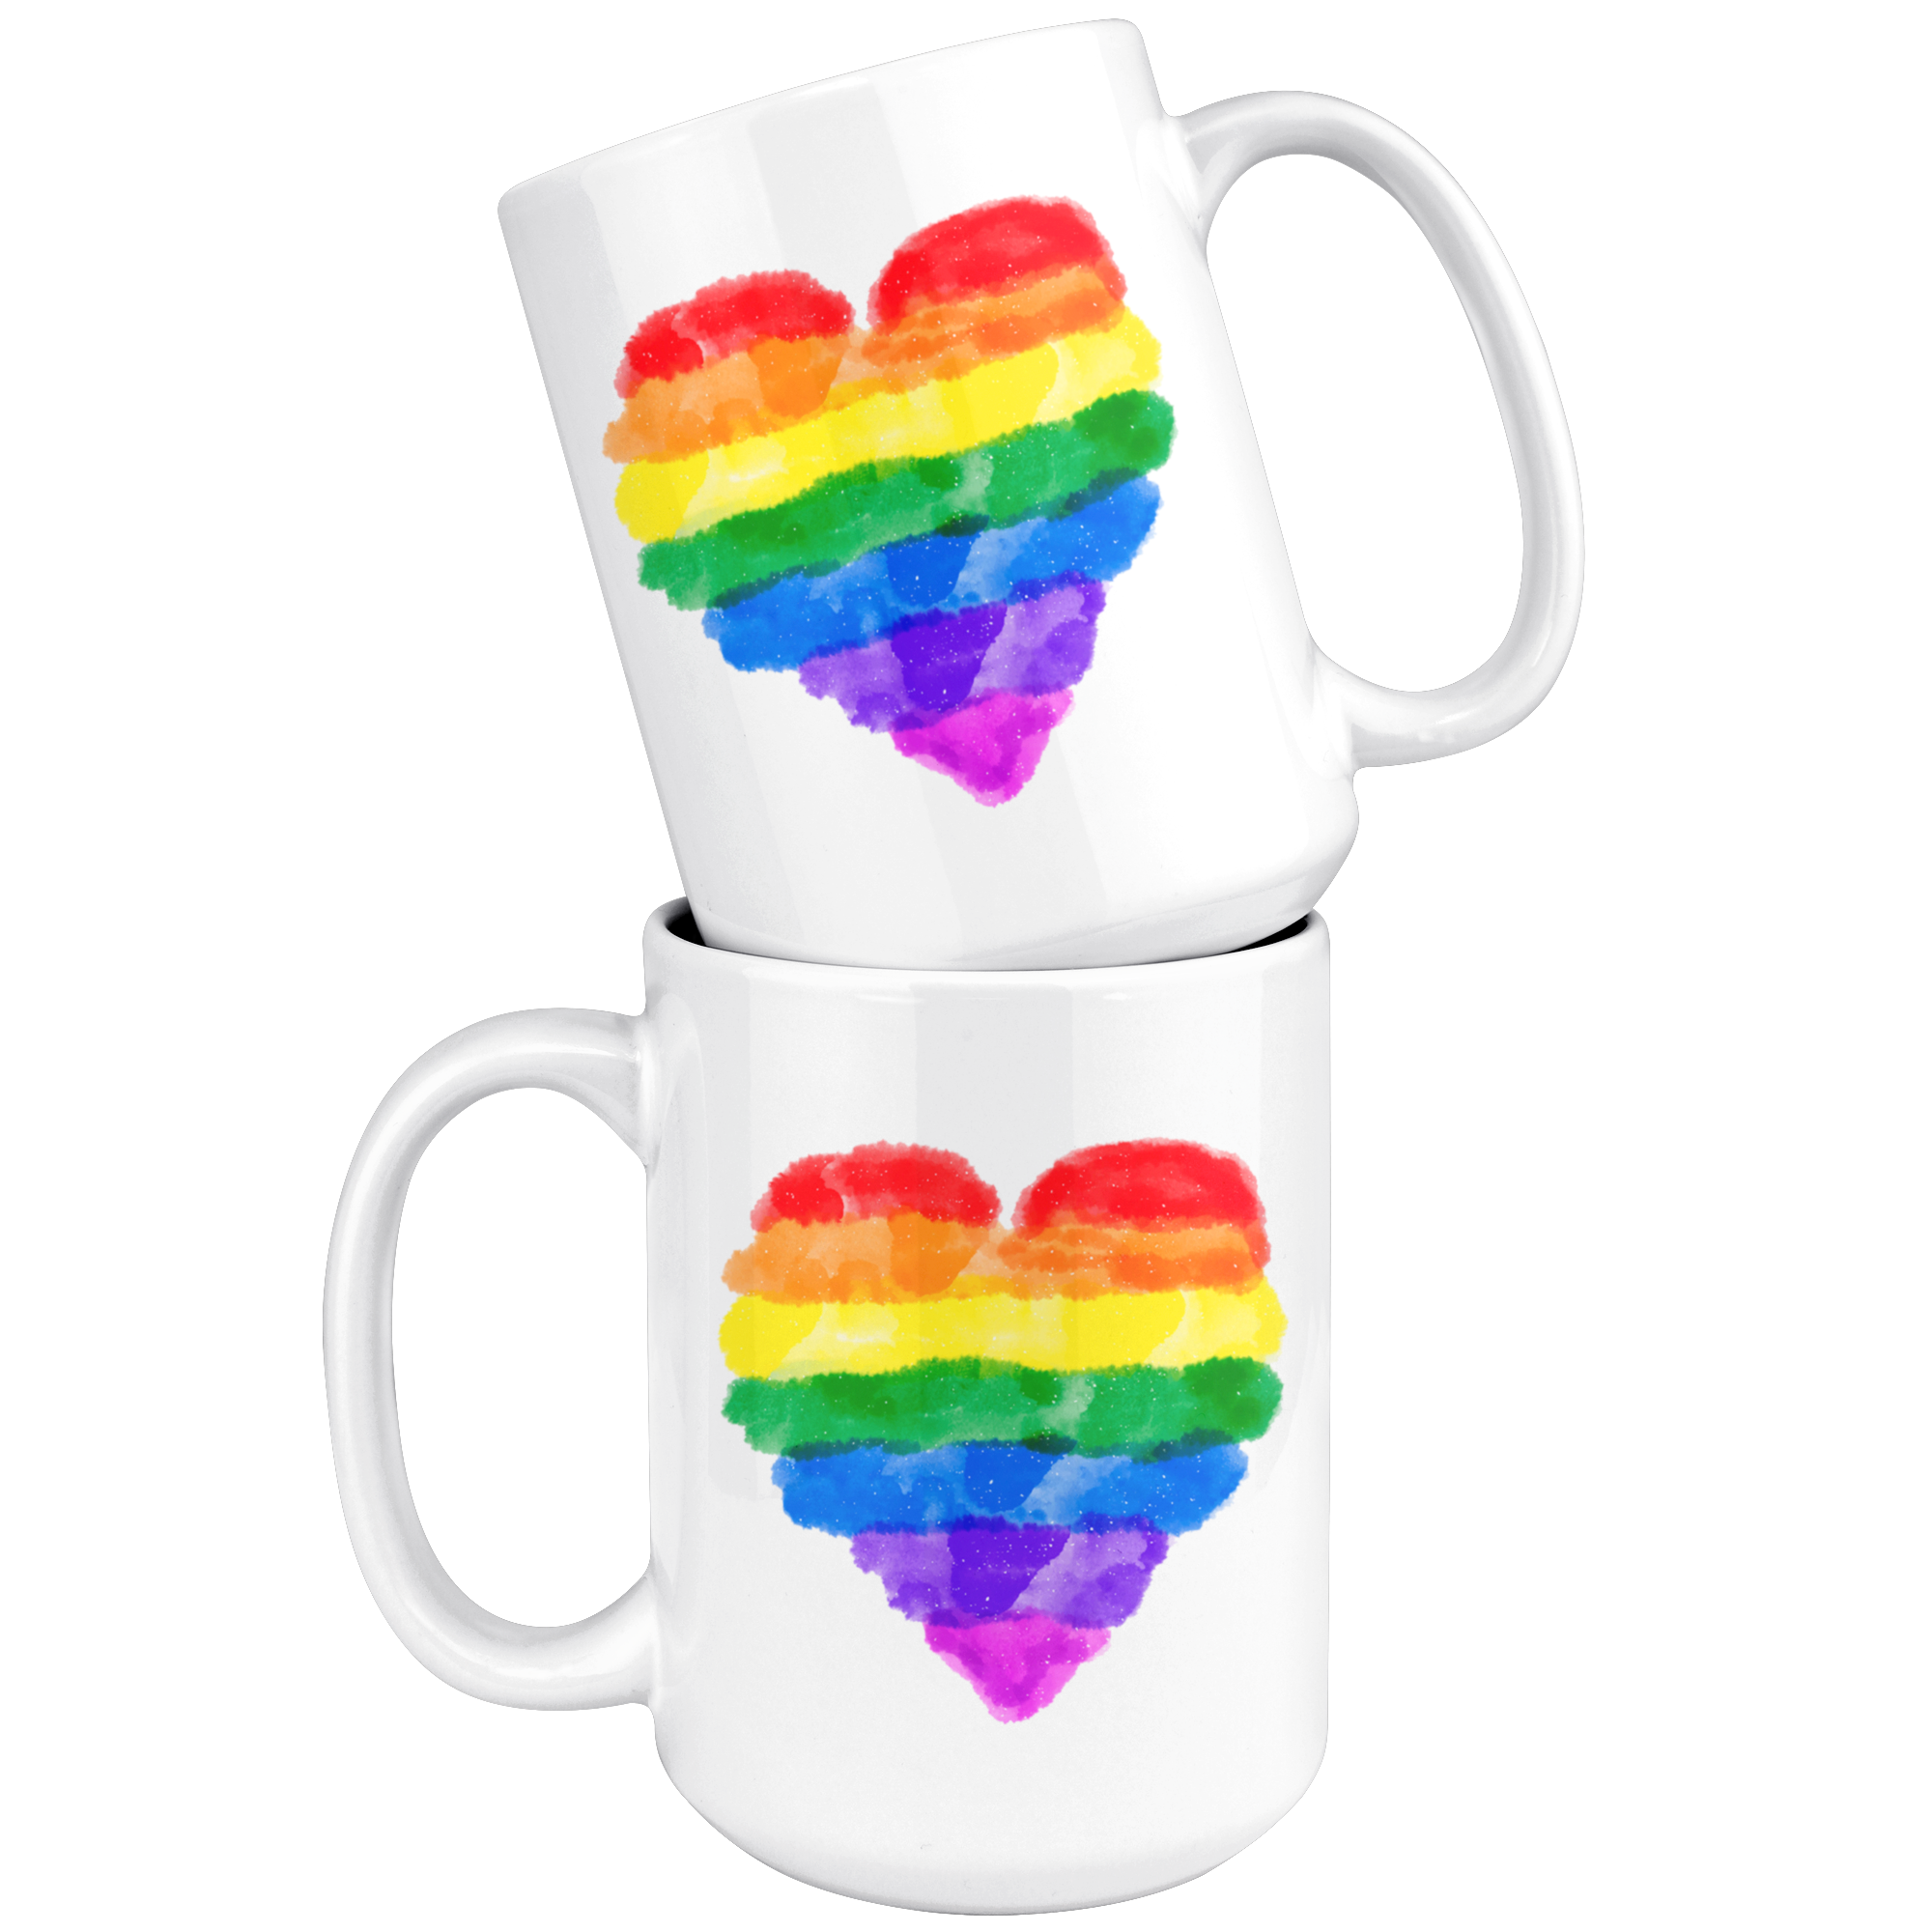 More Self Love Mug - Trendy Coffee Mugs, Rainbow, Colorful - Femfetti